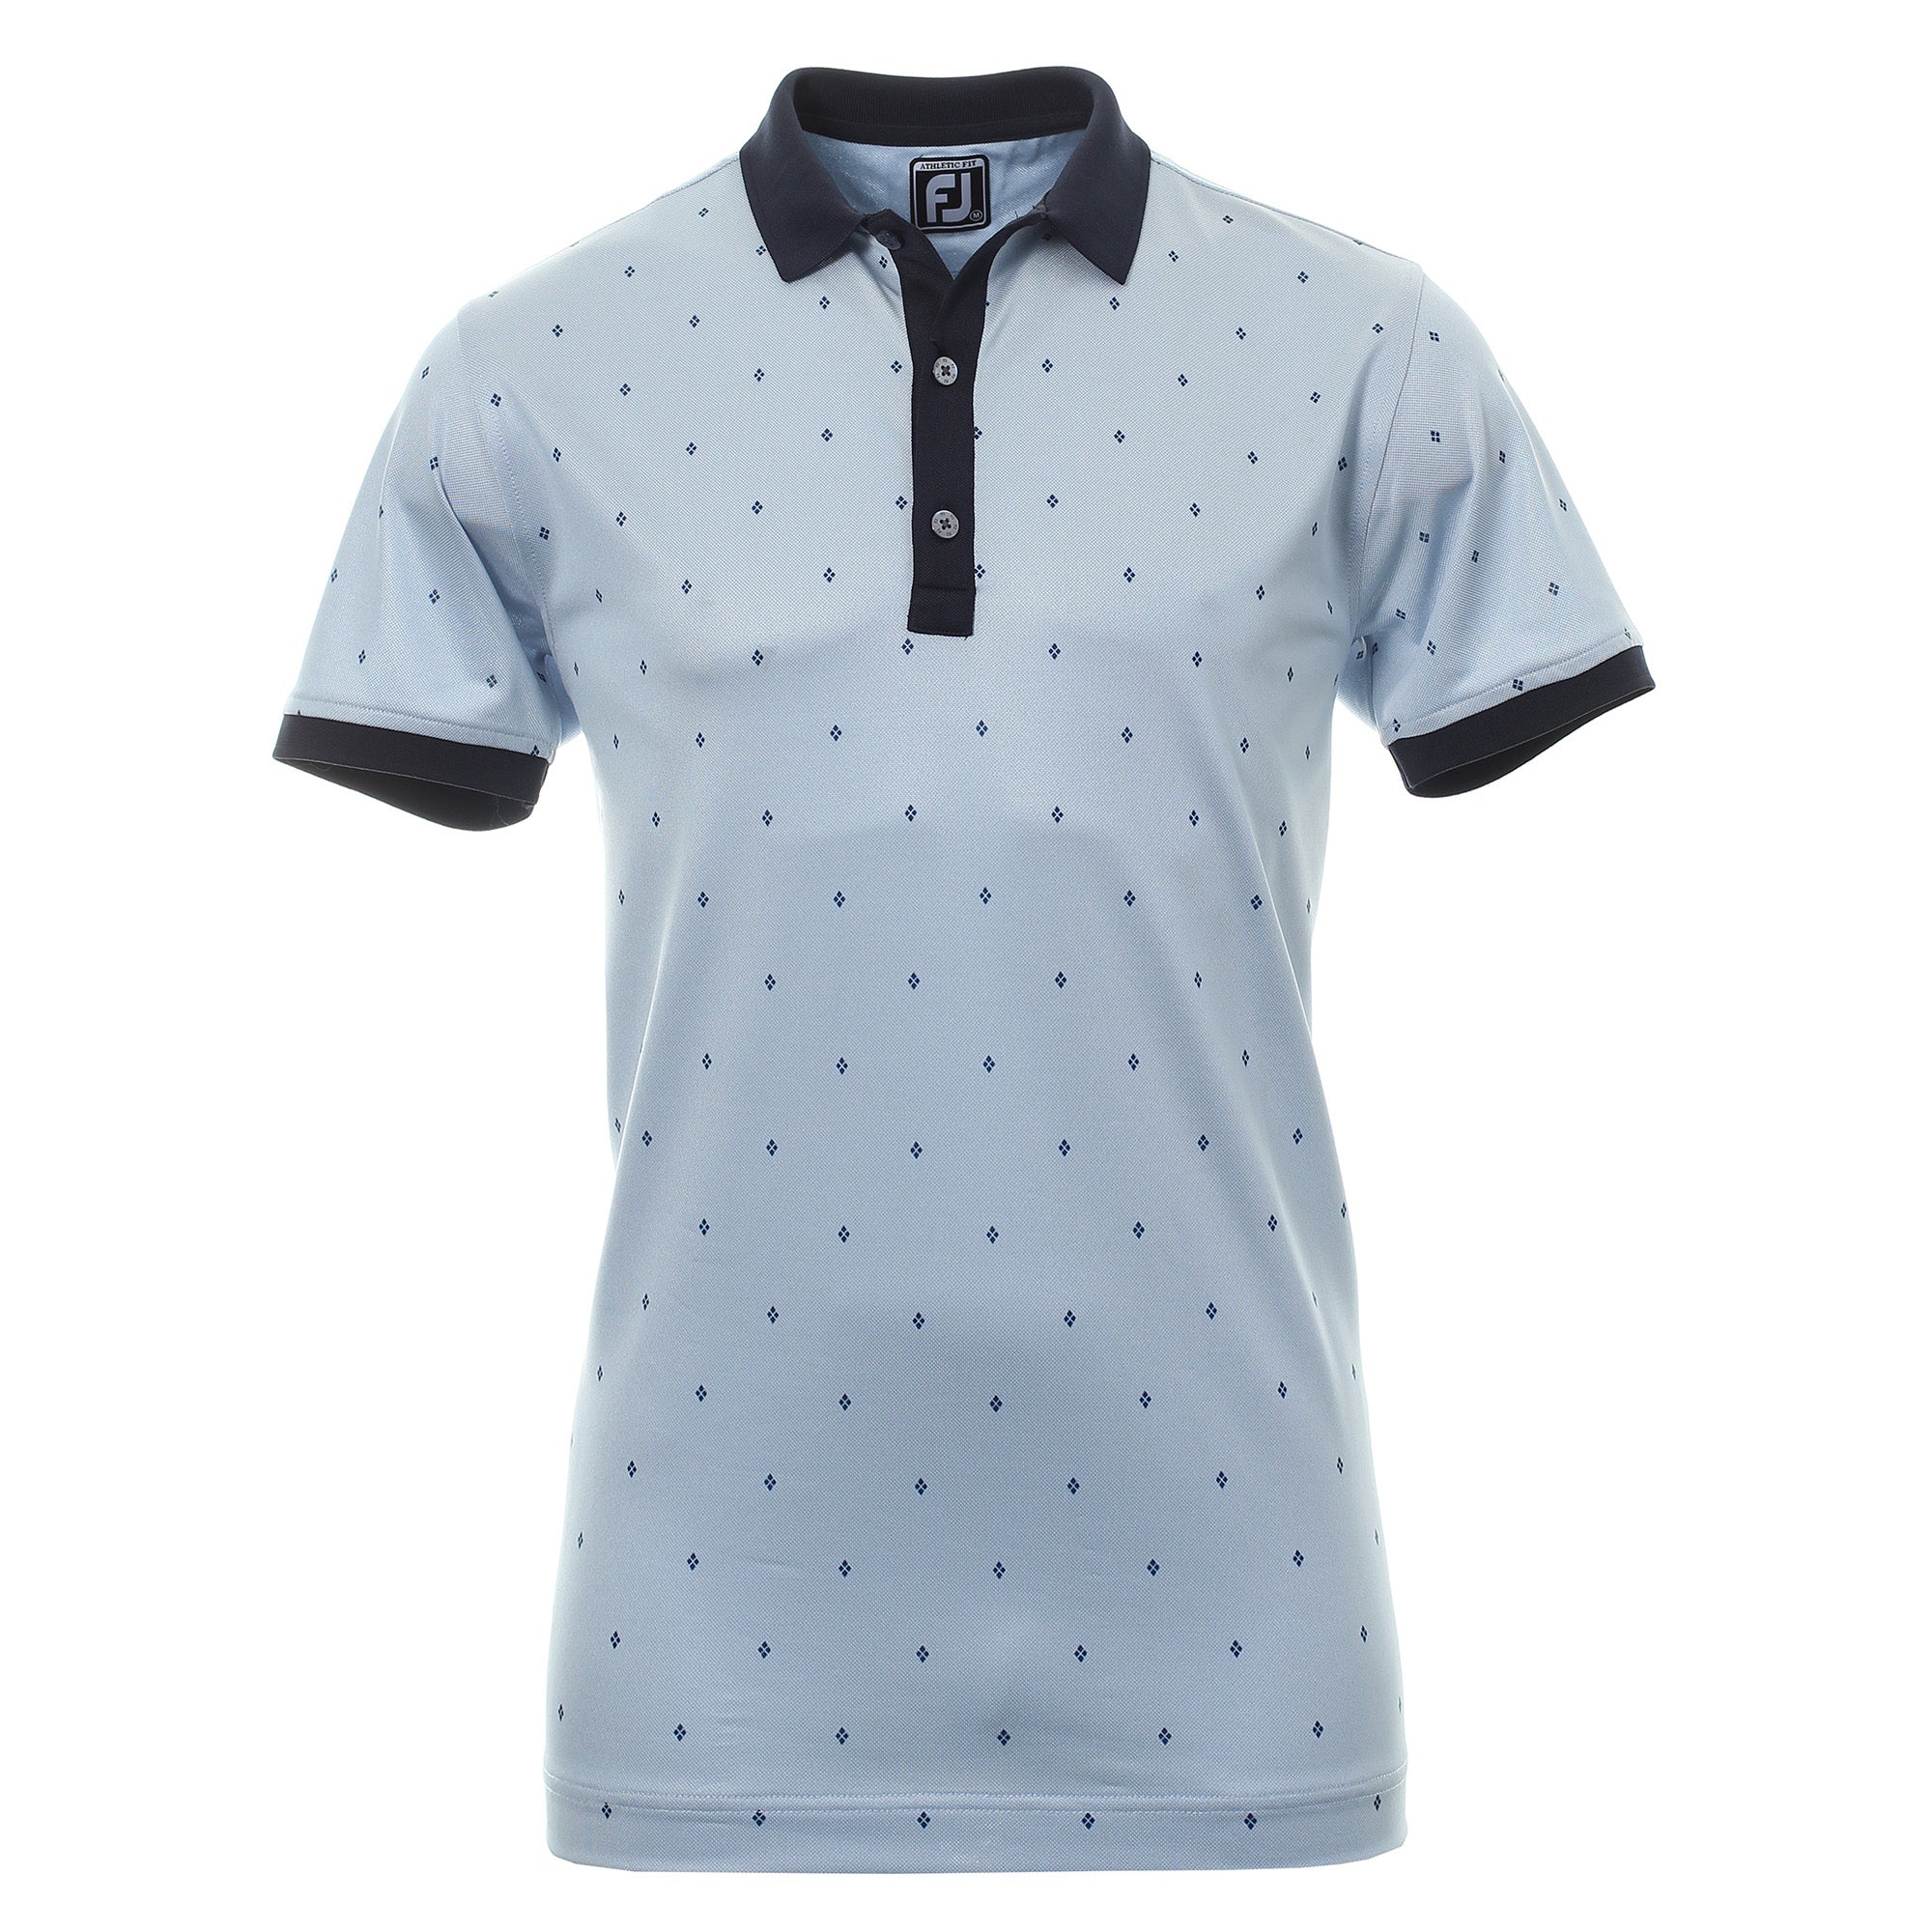 FootJoy Birdseye Argyle Print Golf Shirt 90249 Blue Fog White Navy ...